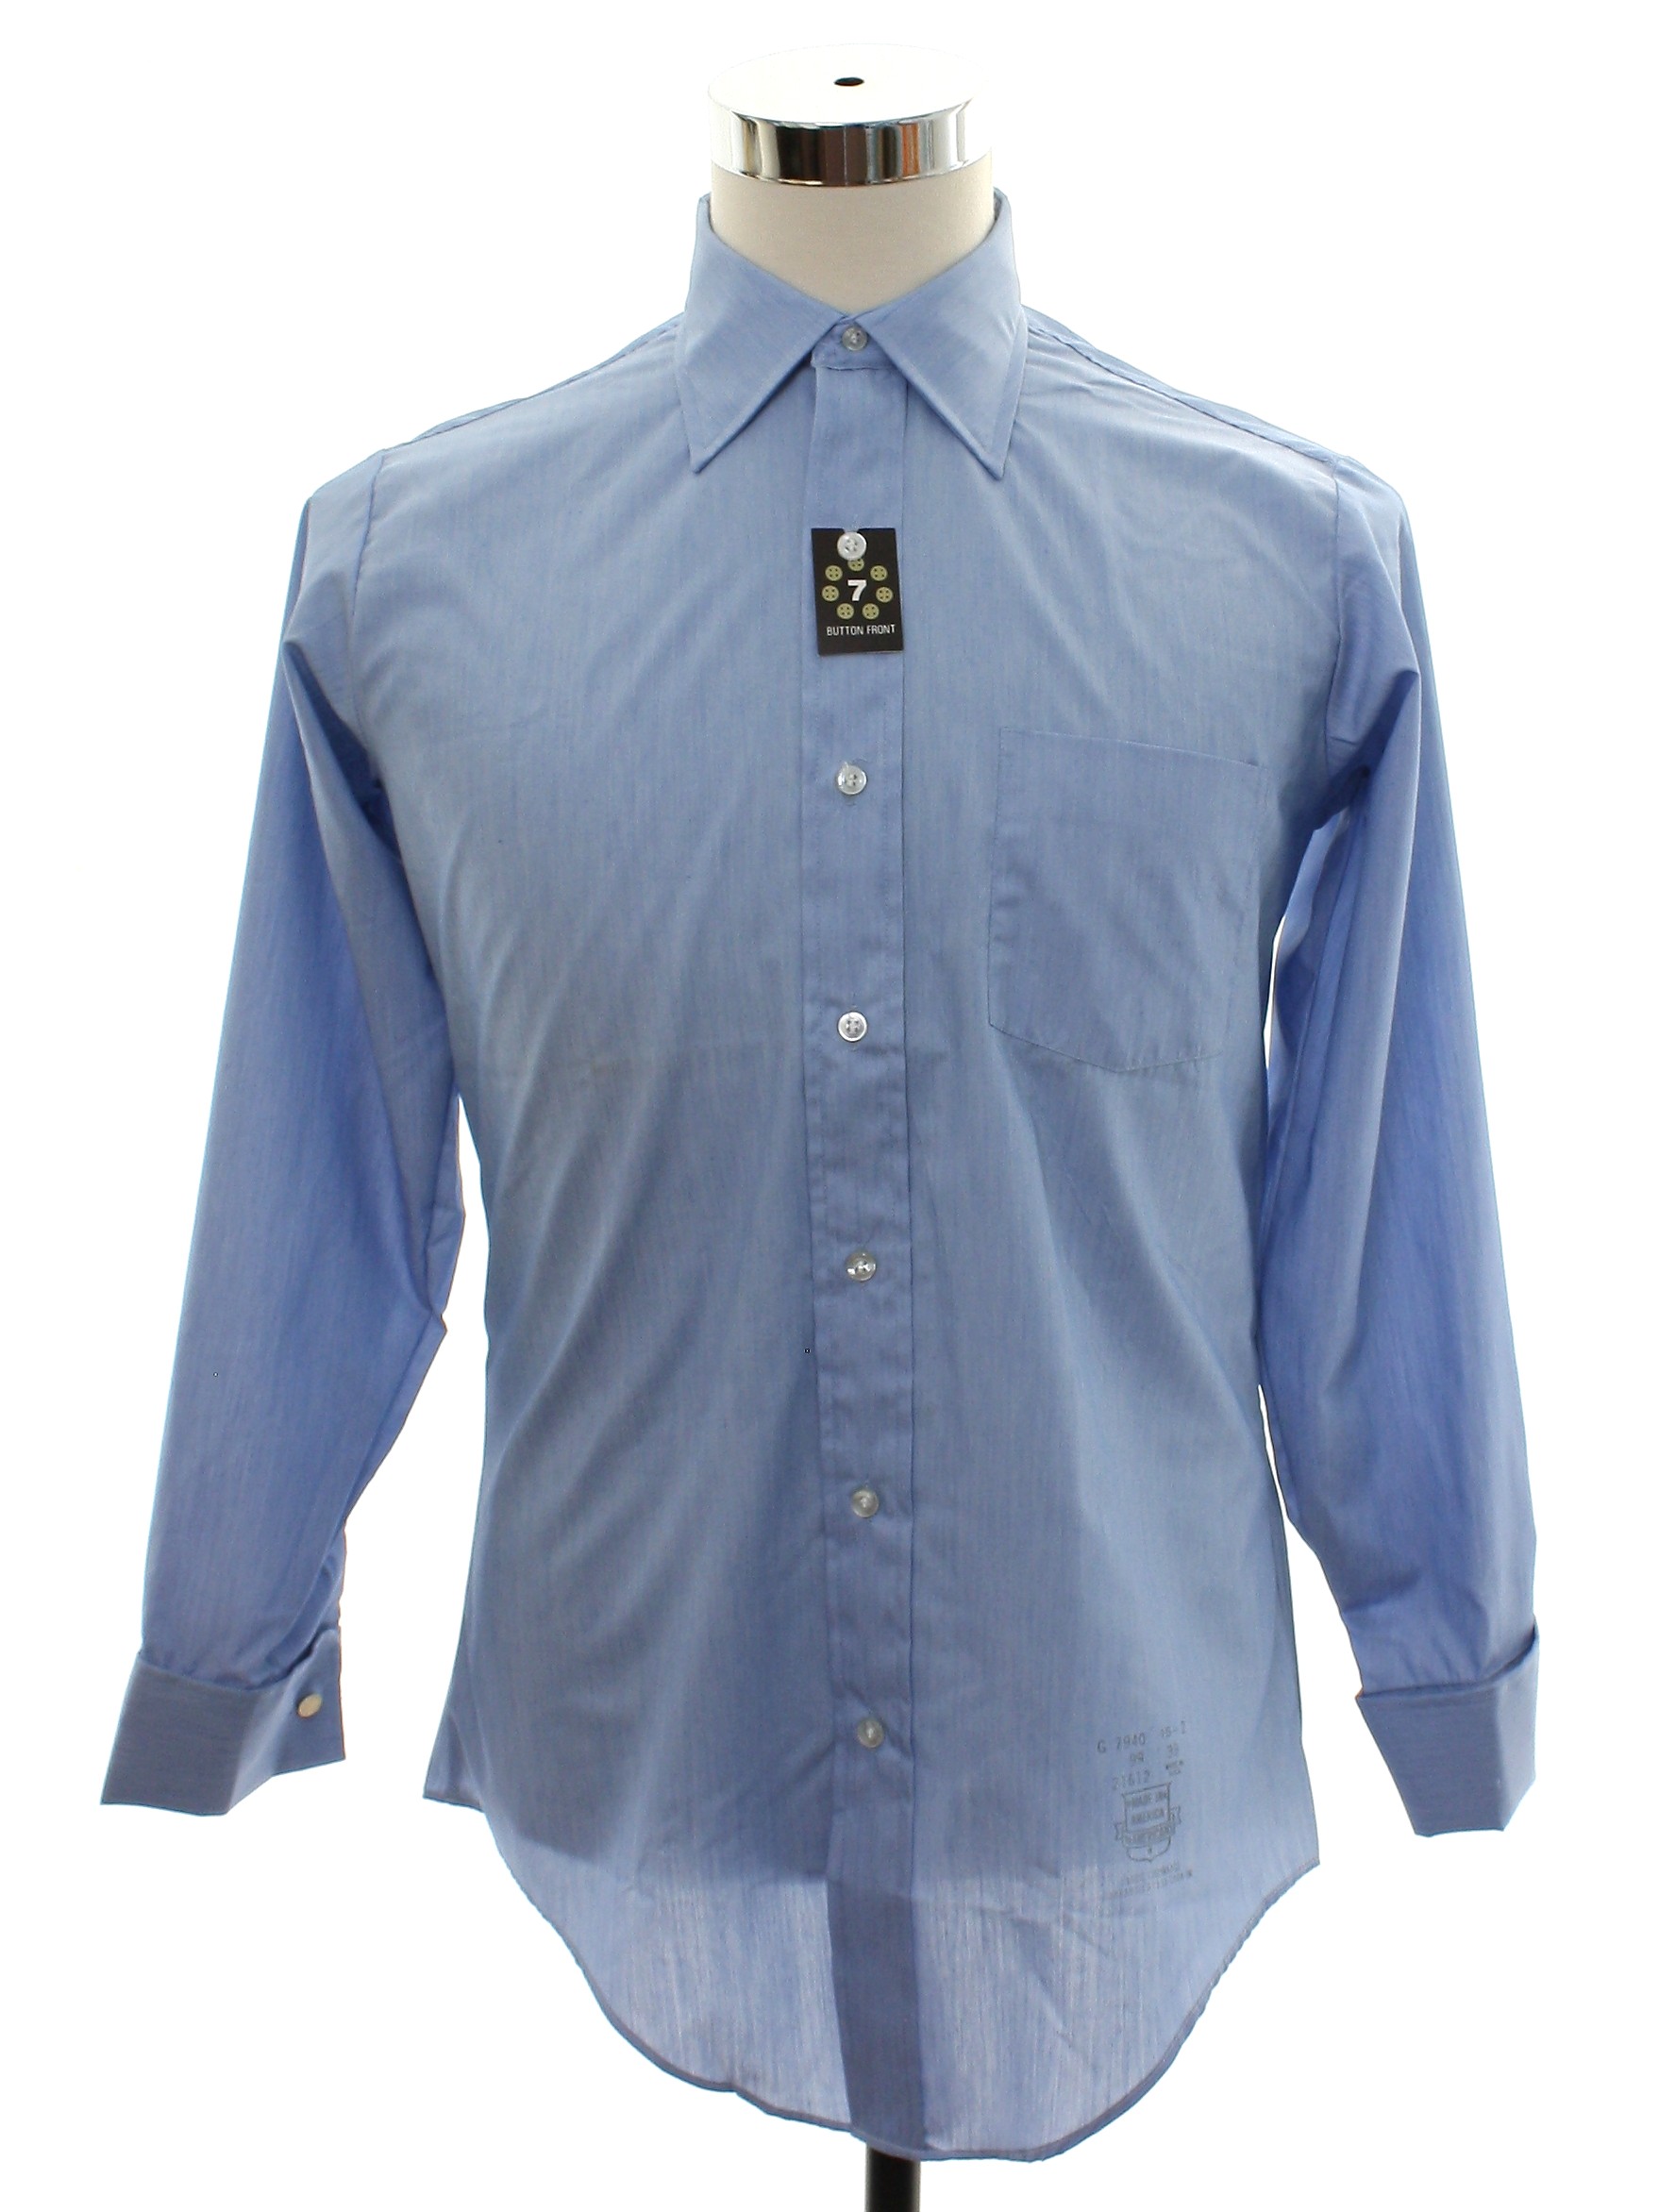 Sixties Vintage Shirt: 60s -Golden Vee, Endura-Press- Mens heather ...